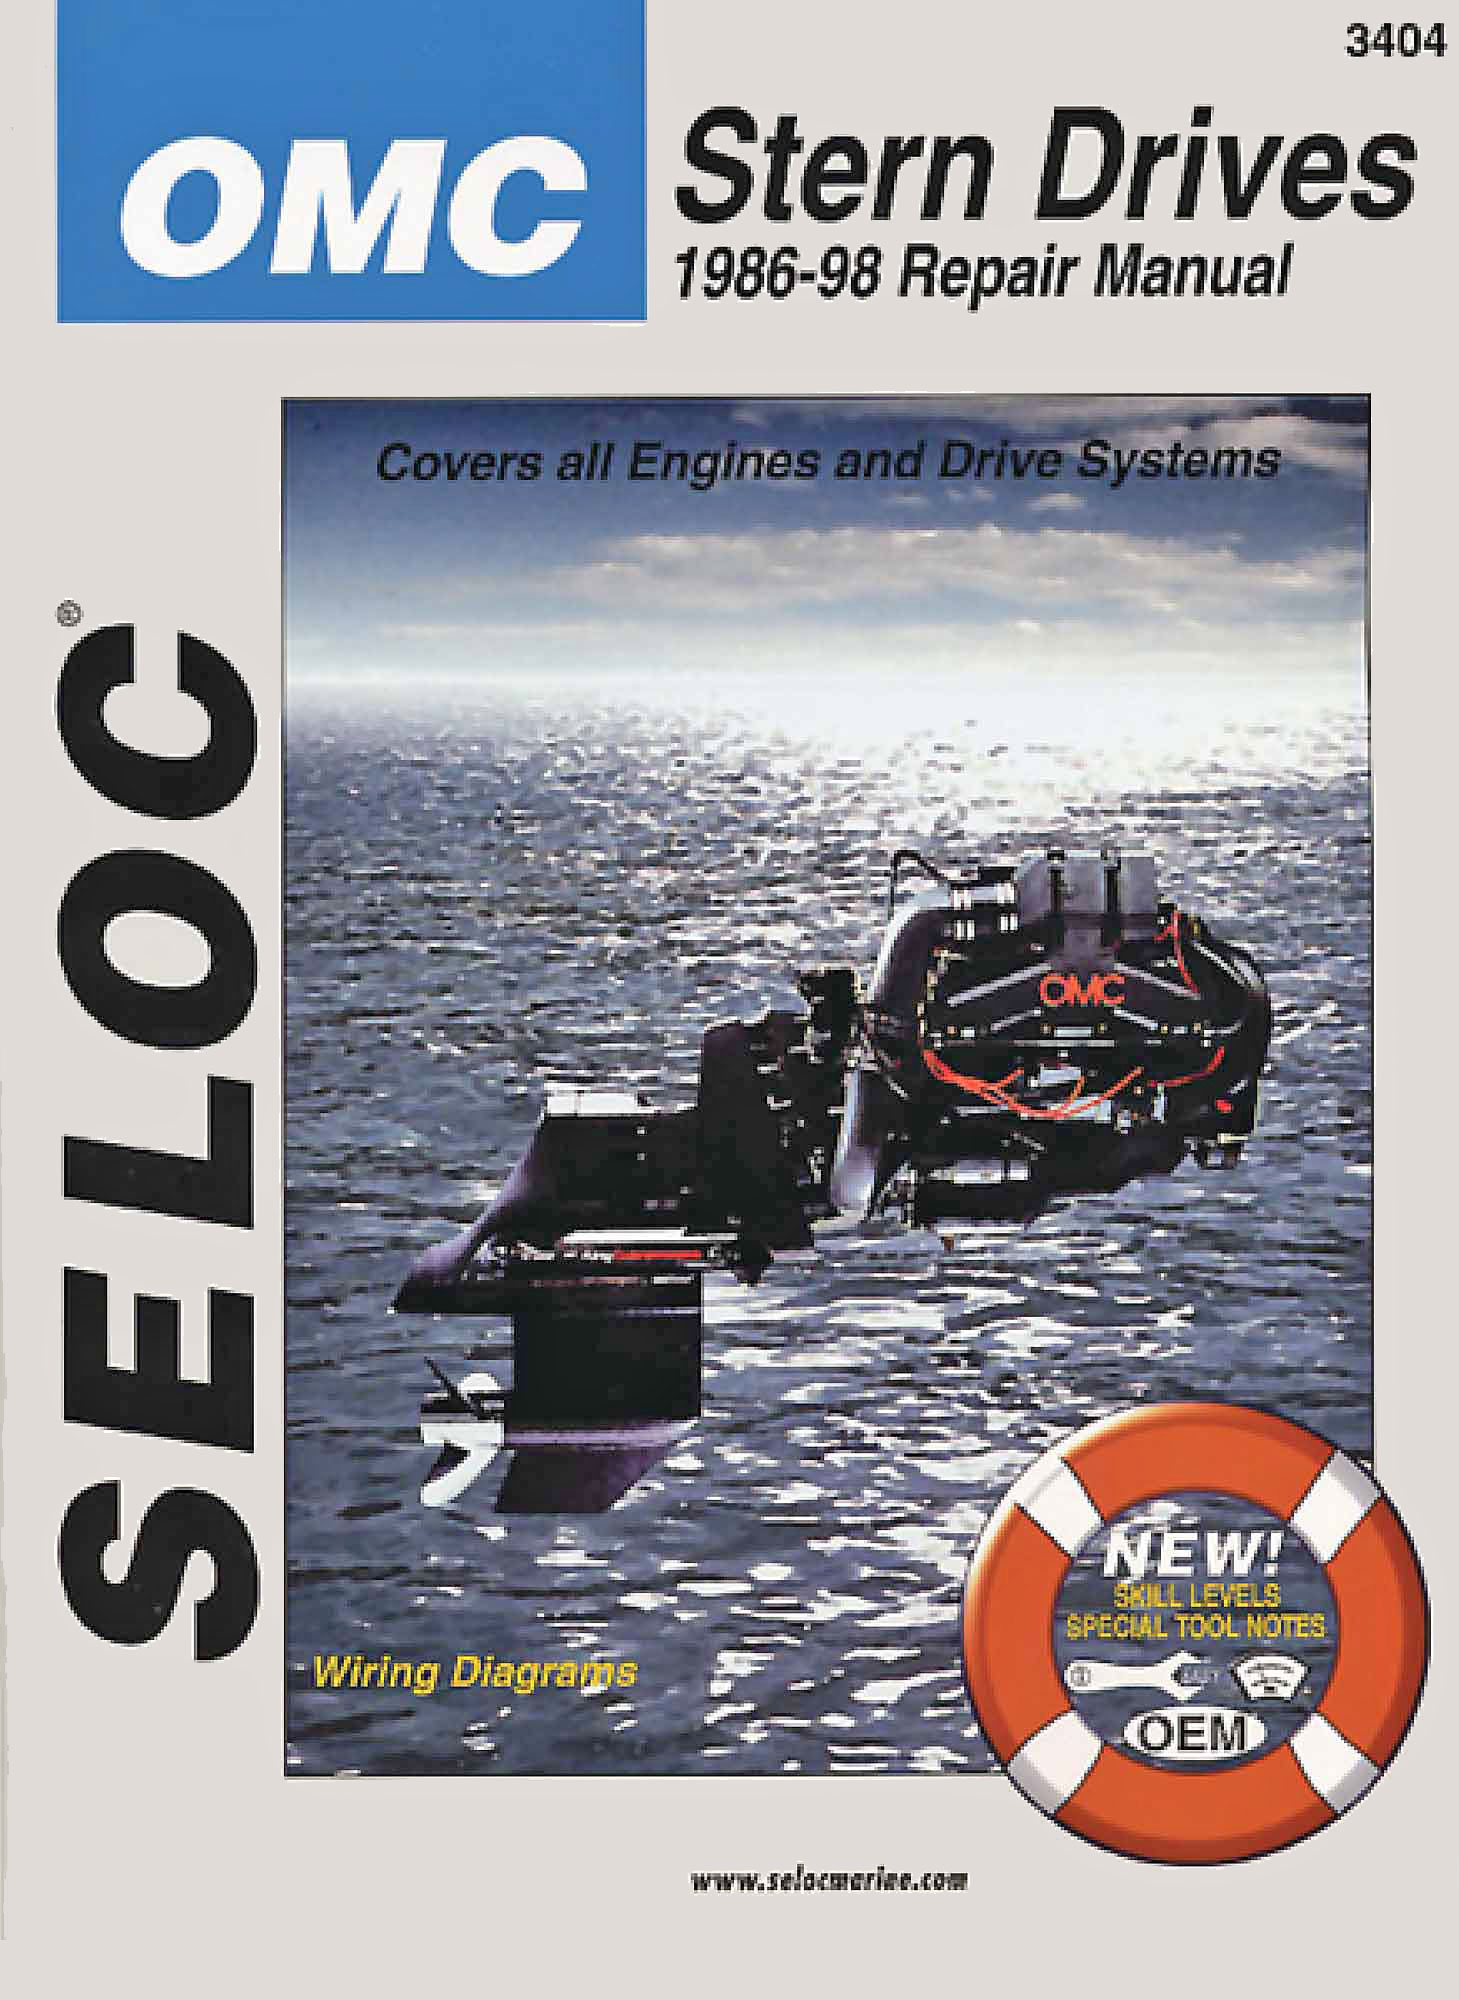 Seloc 3404 OMC Cobra, King Cobra & Cobra SX Stern Drive Tune-up & Repair Manual: All Models 1986-1998